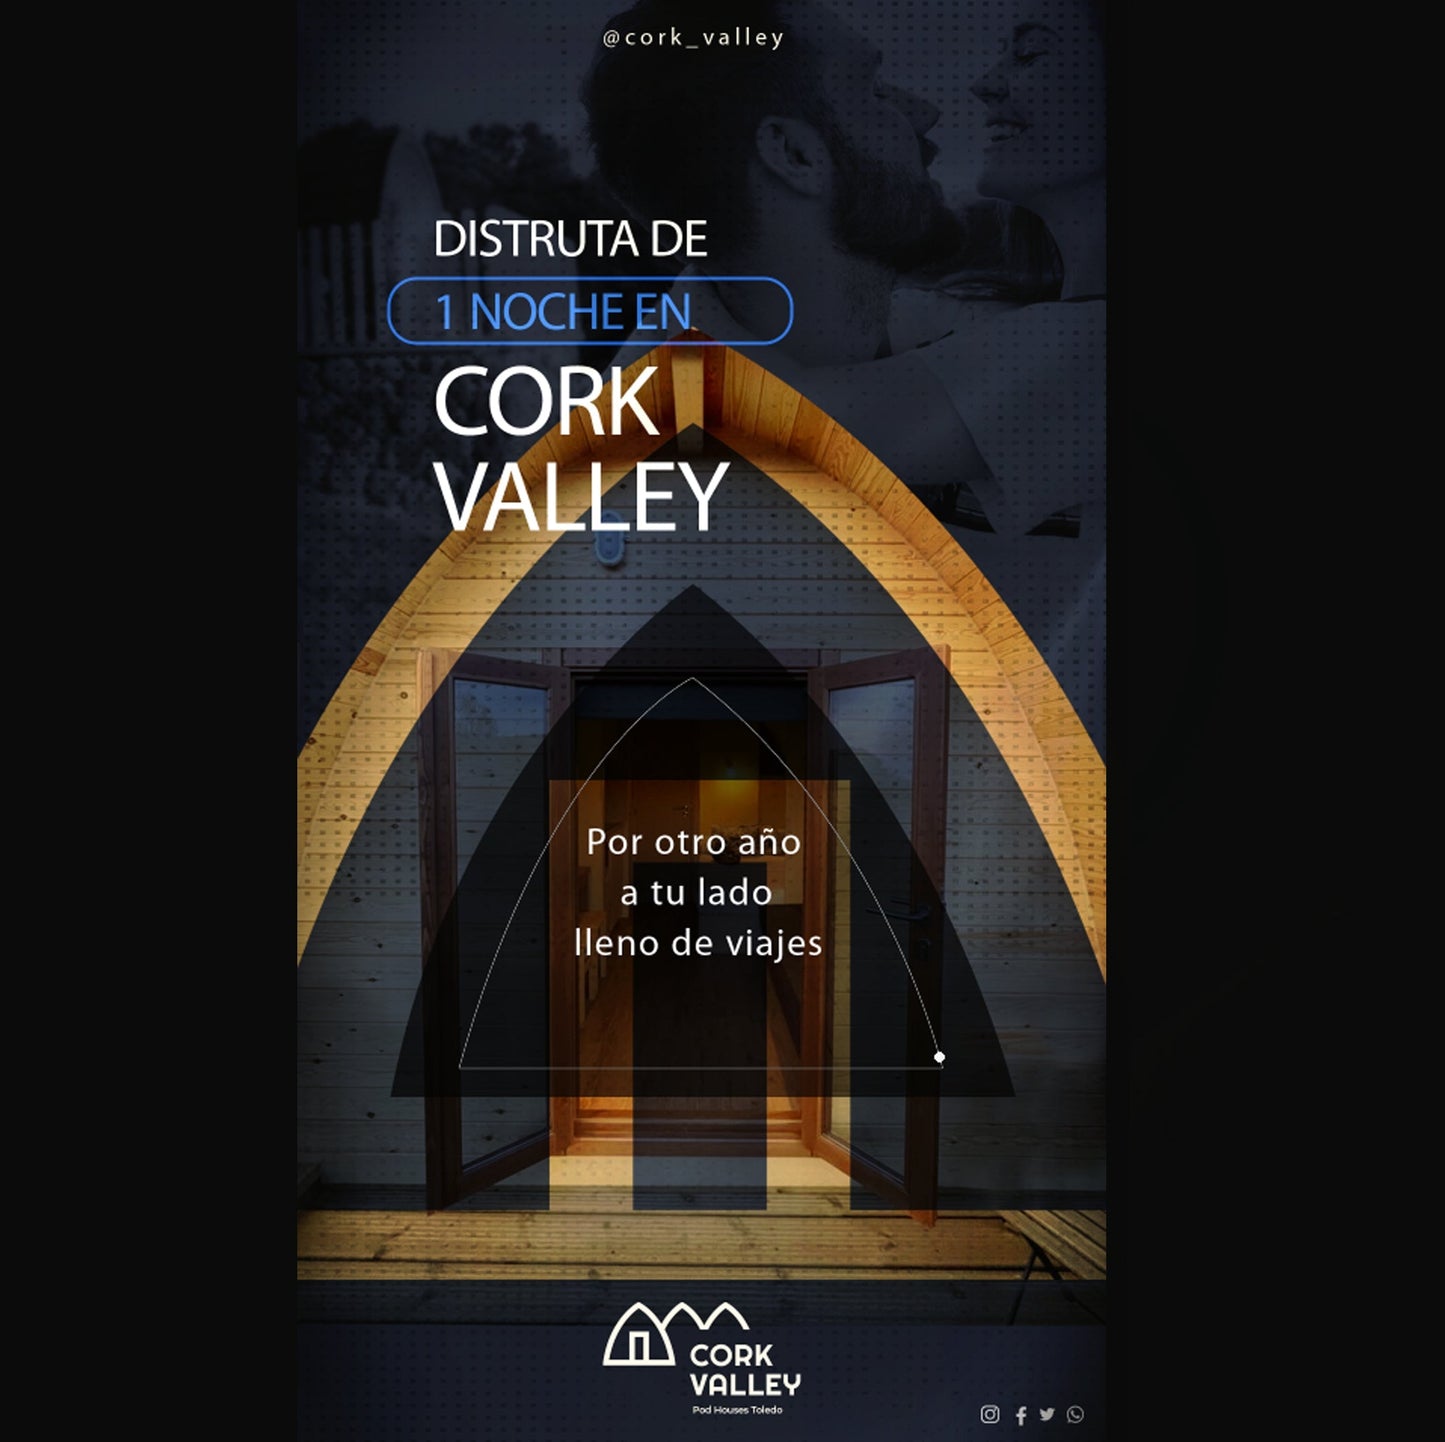 P0STAL Regalo Cork Valley 200€